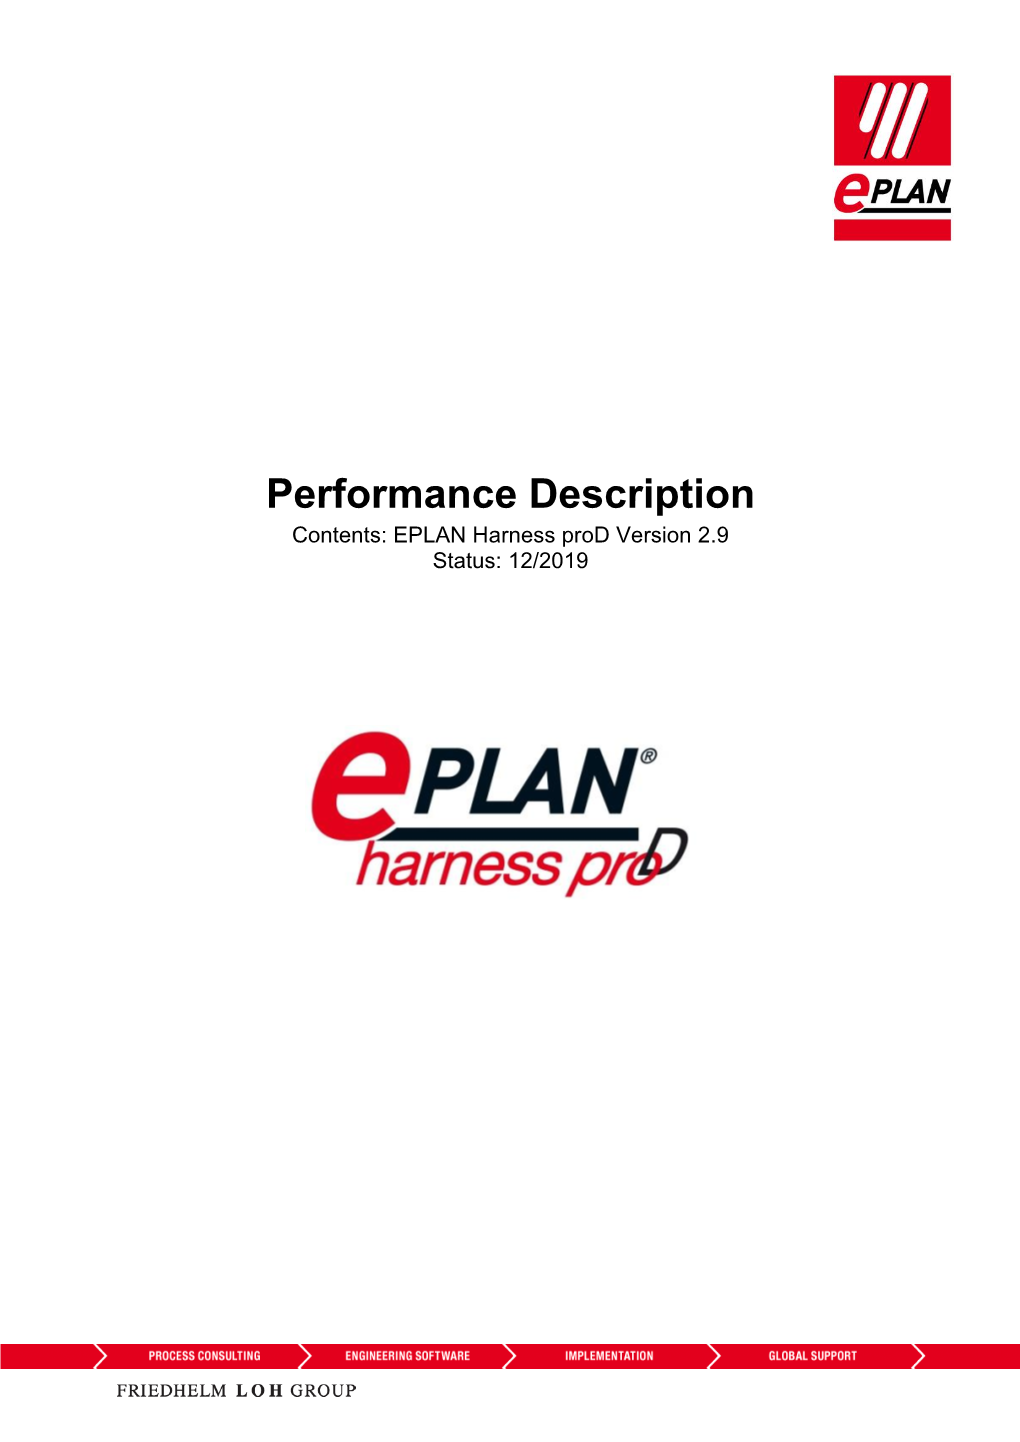 Performance Description EPLAN Harness Prod